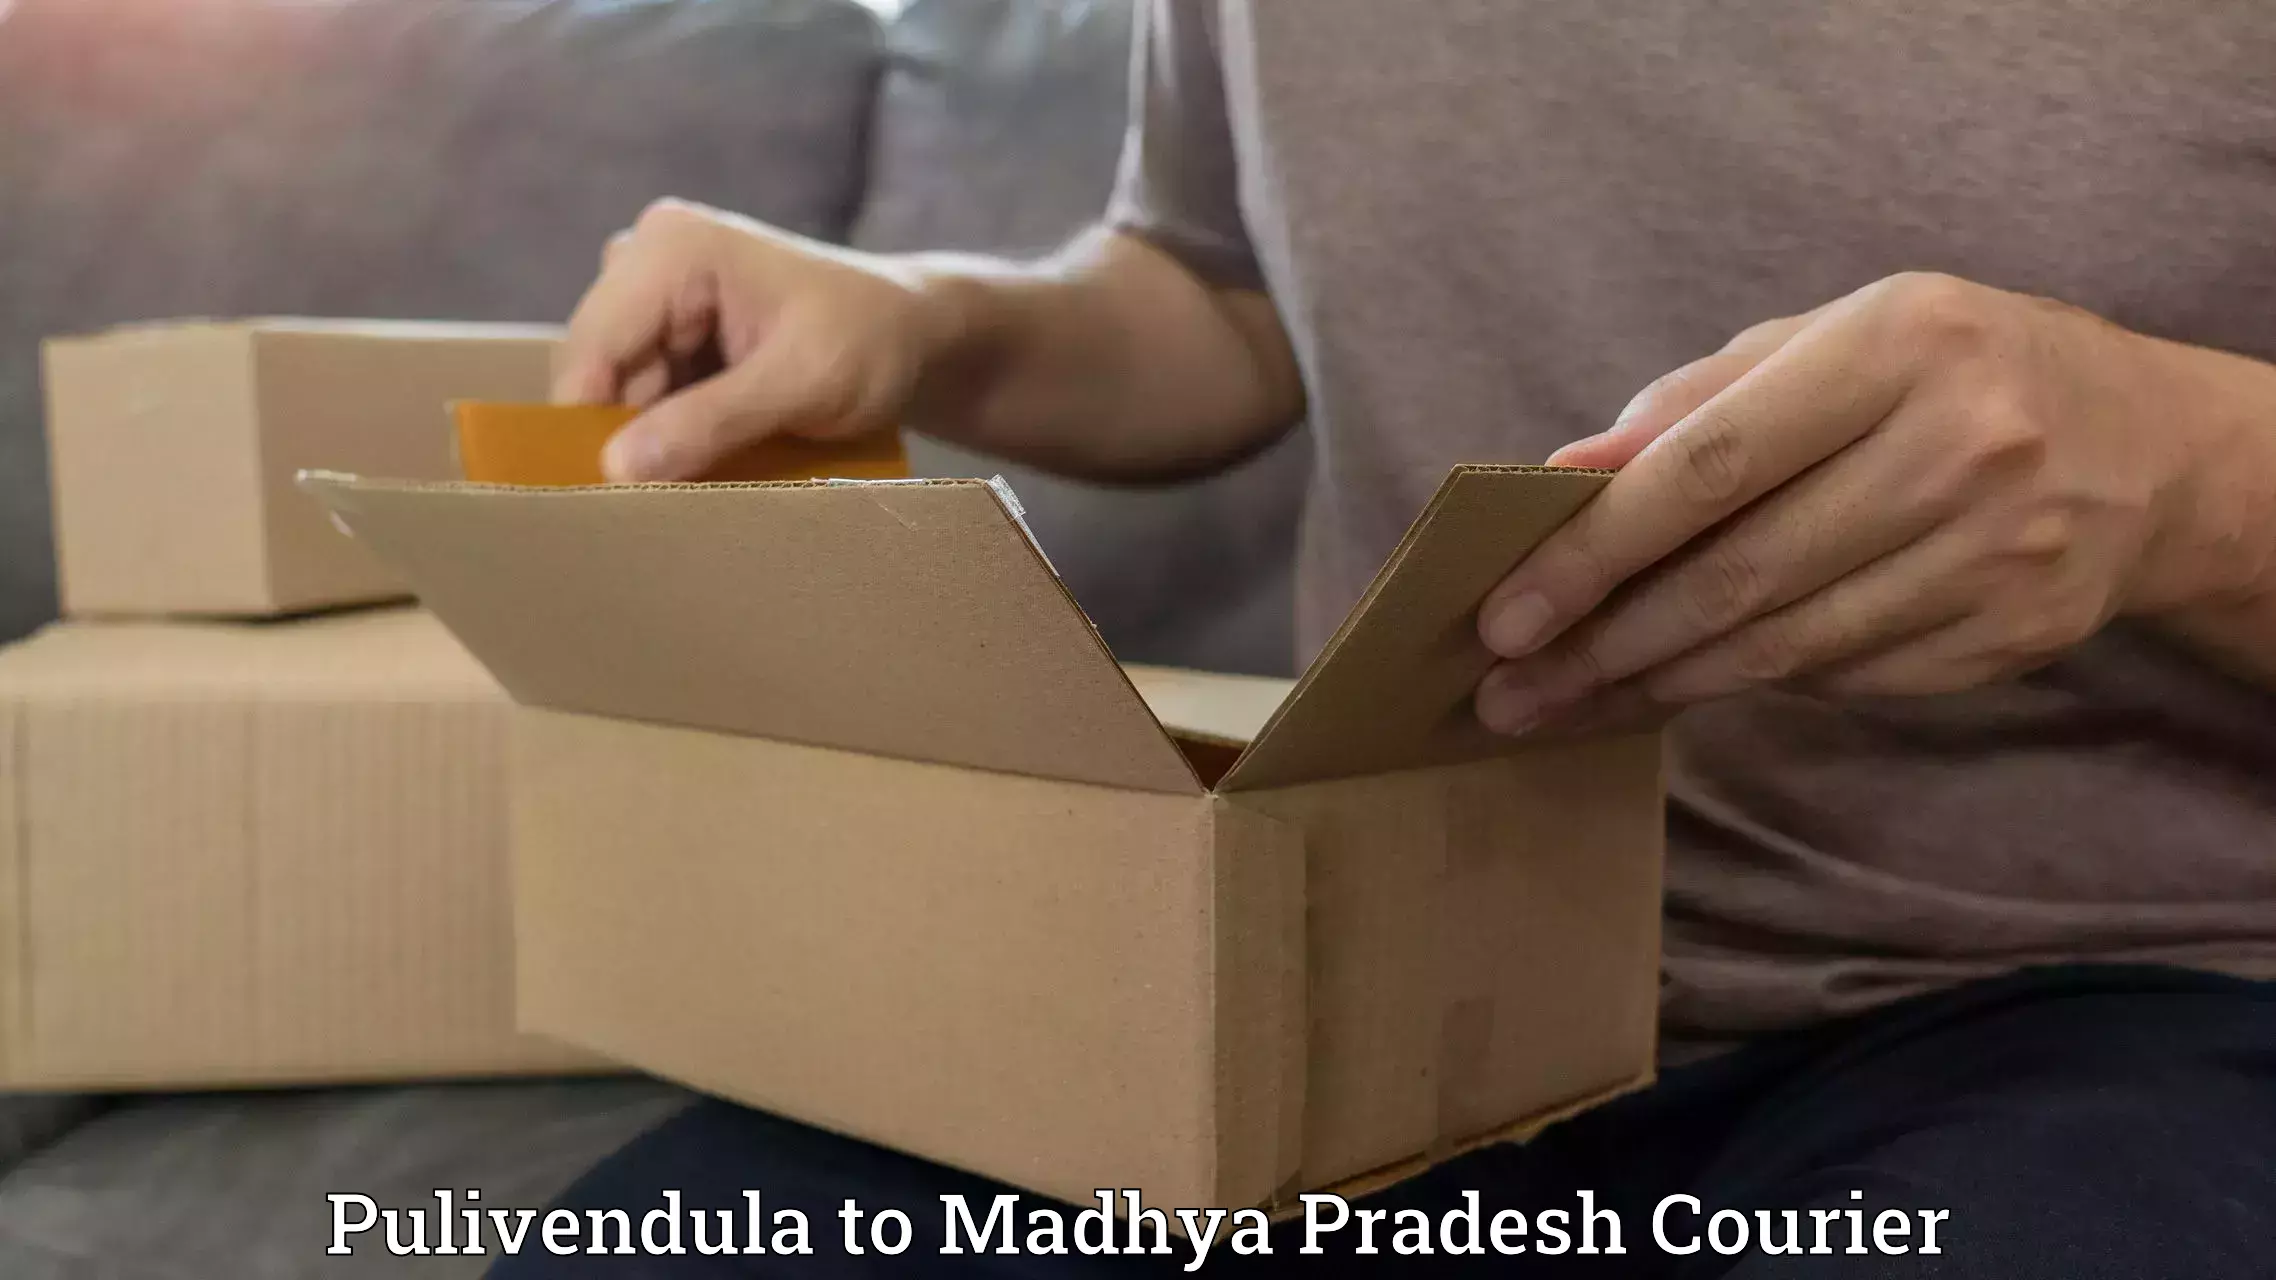 Global logistics network Pulivendula to Madhya Pradesh